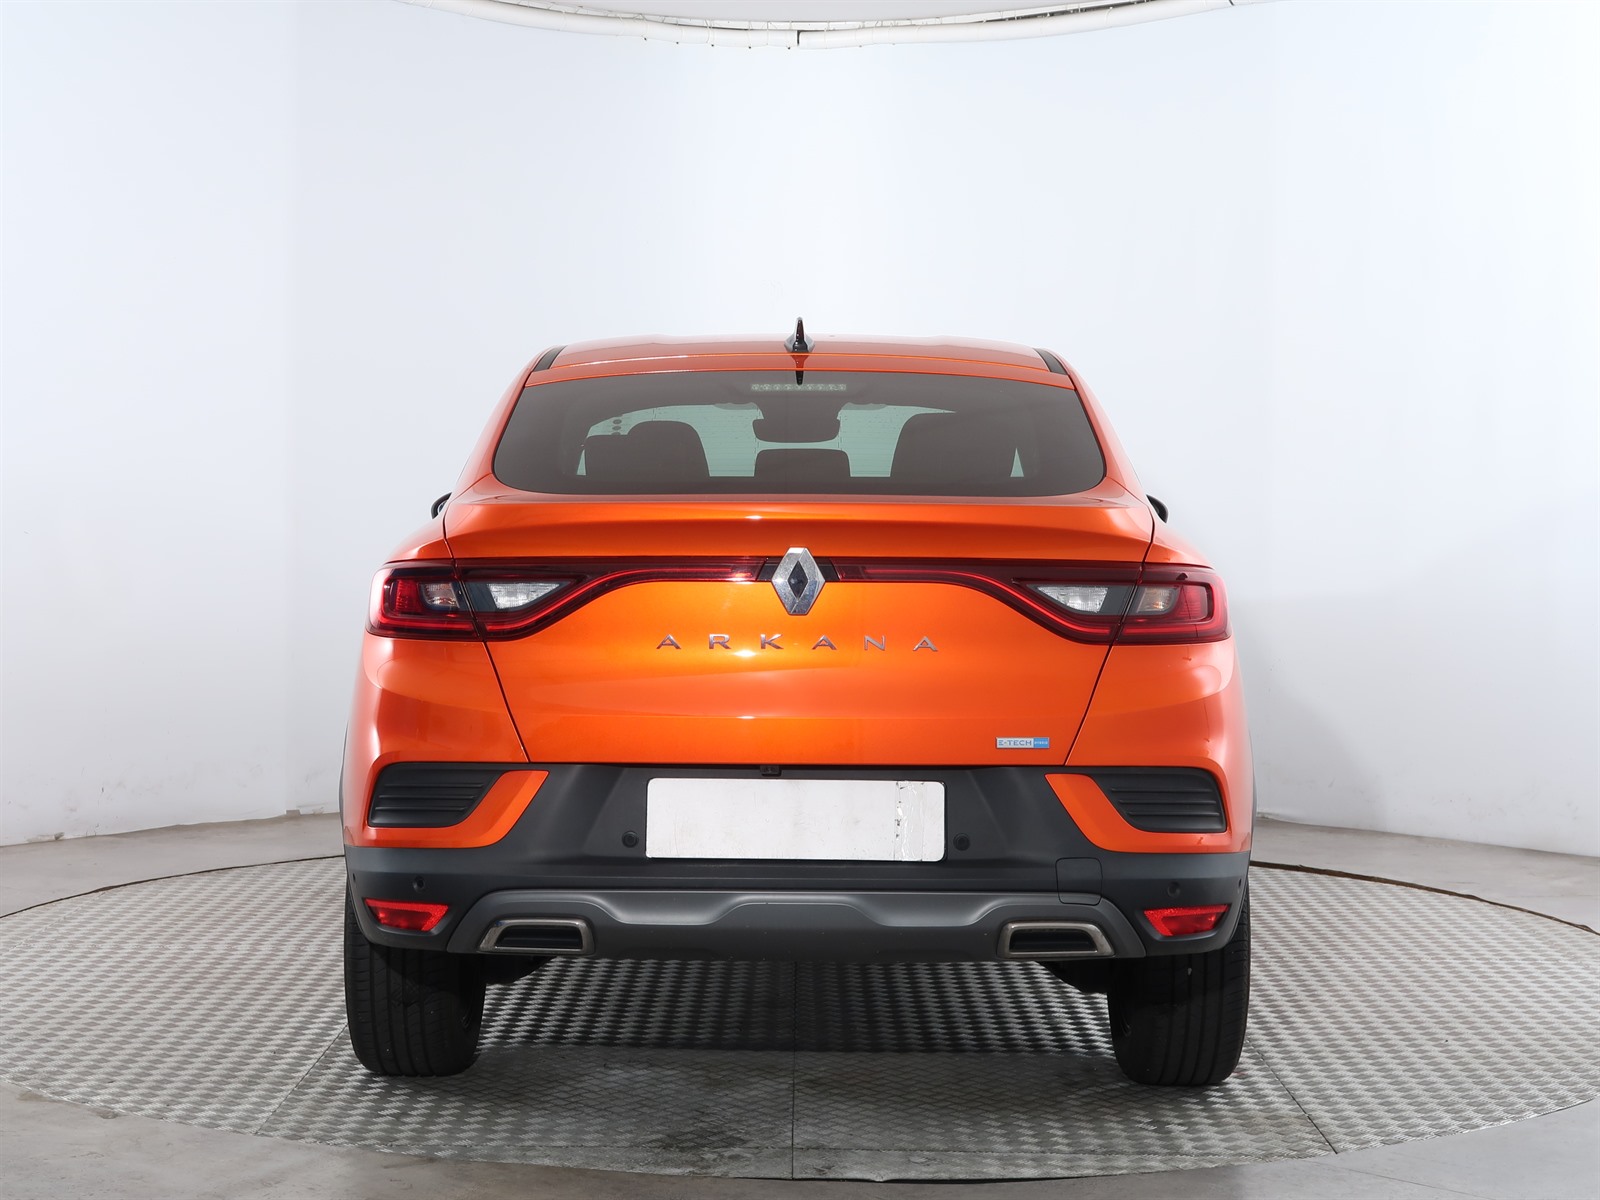 Renault Ostatní, 2022 - pohled č. 6